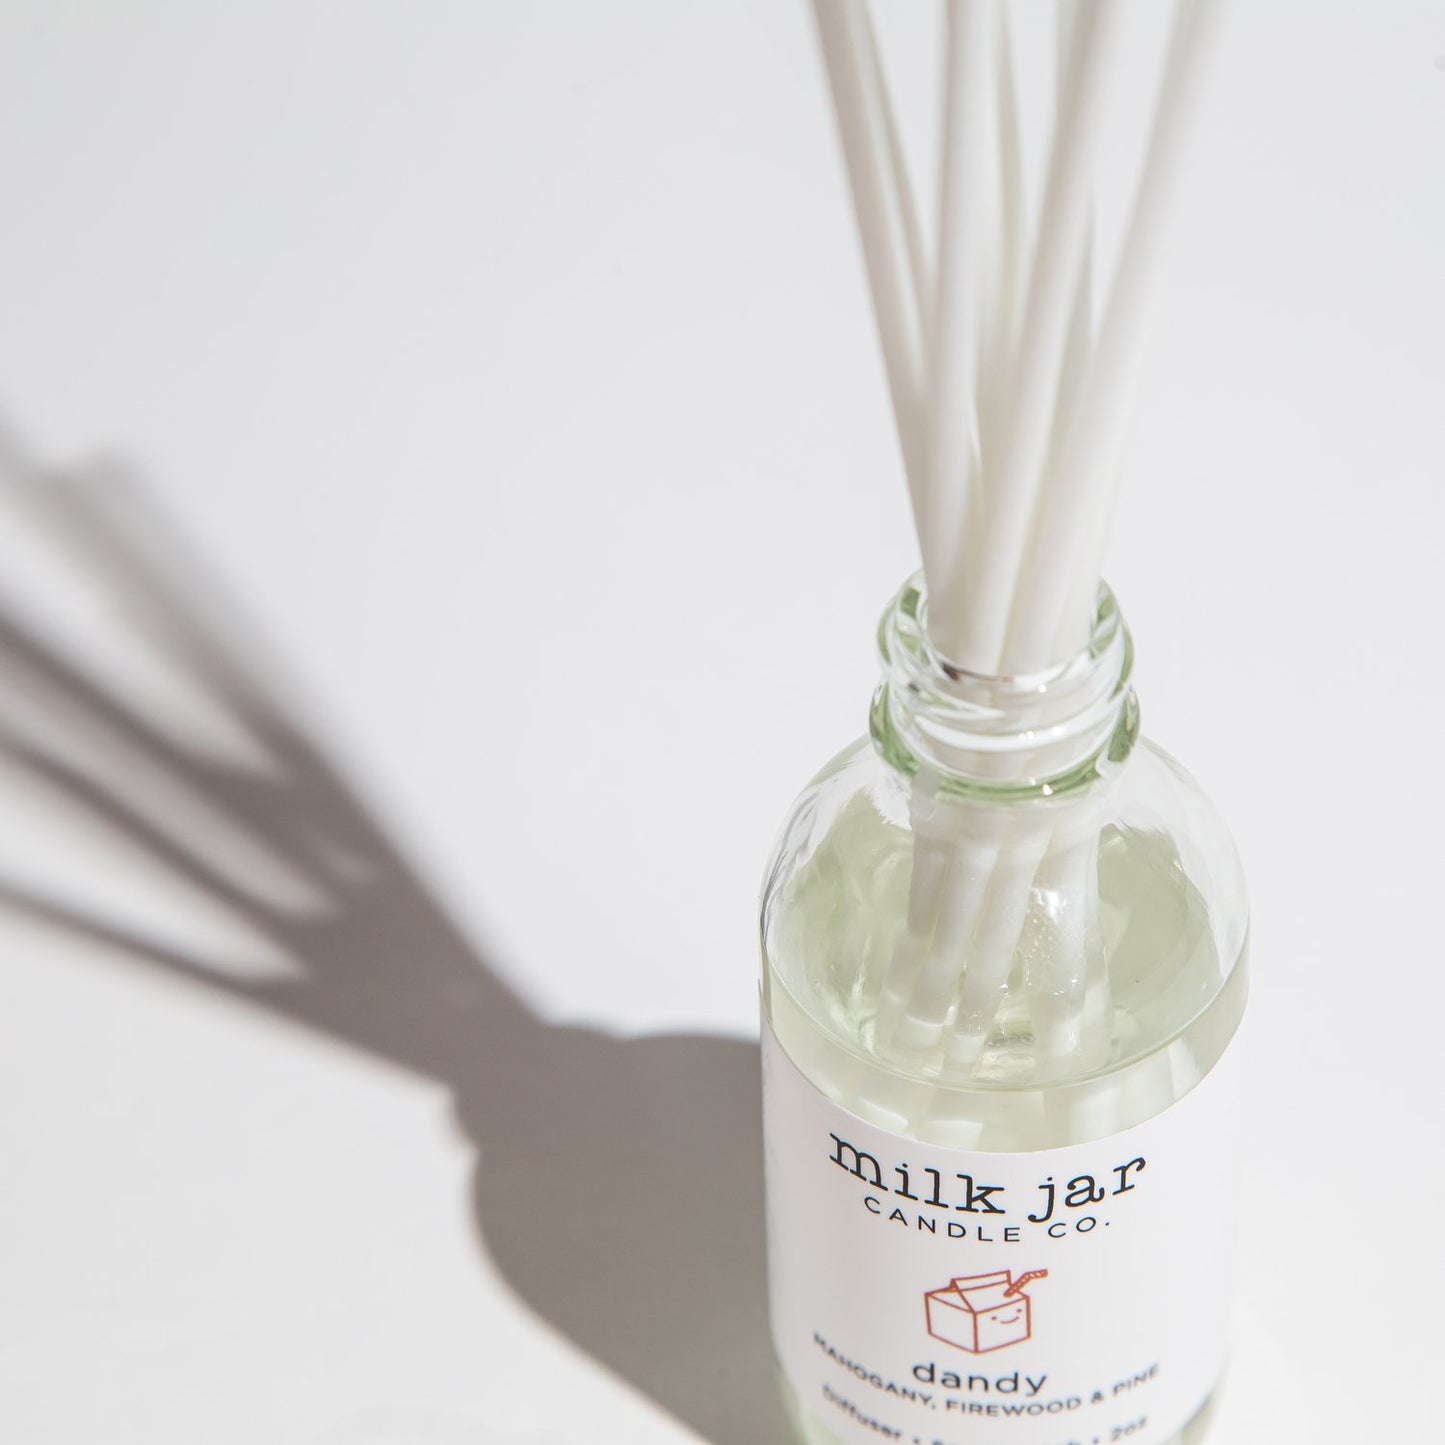 Milk Jar Candle Co / Dandy Diffuser 2oz